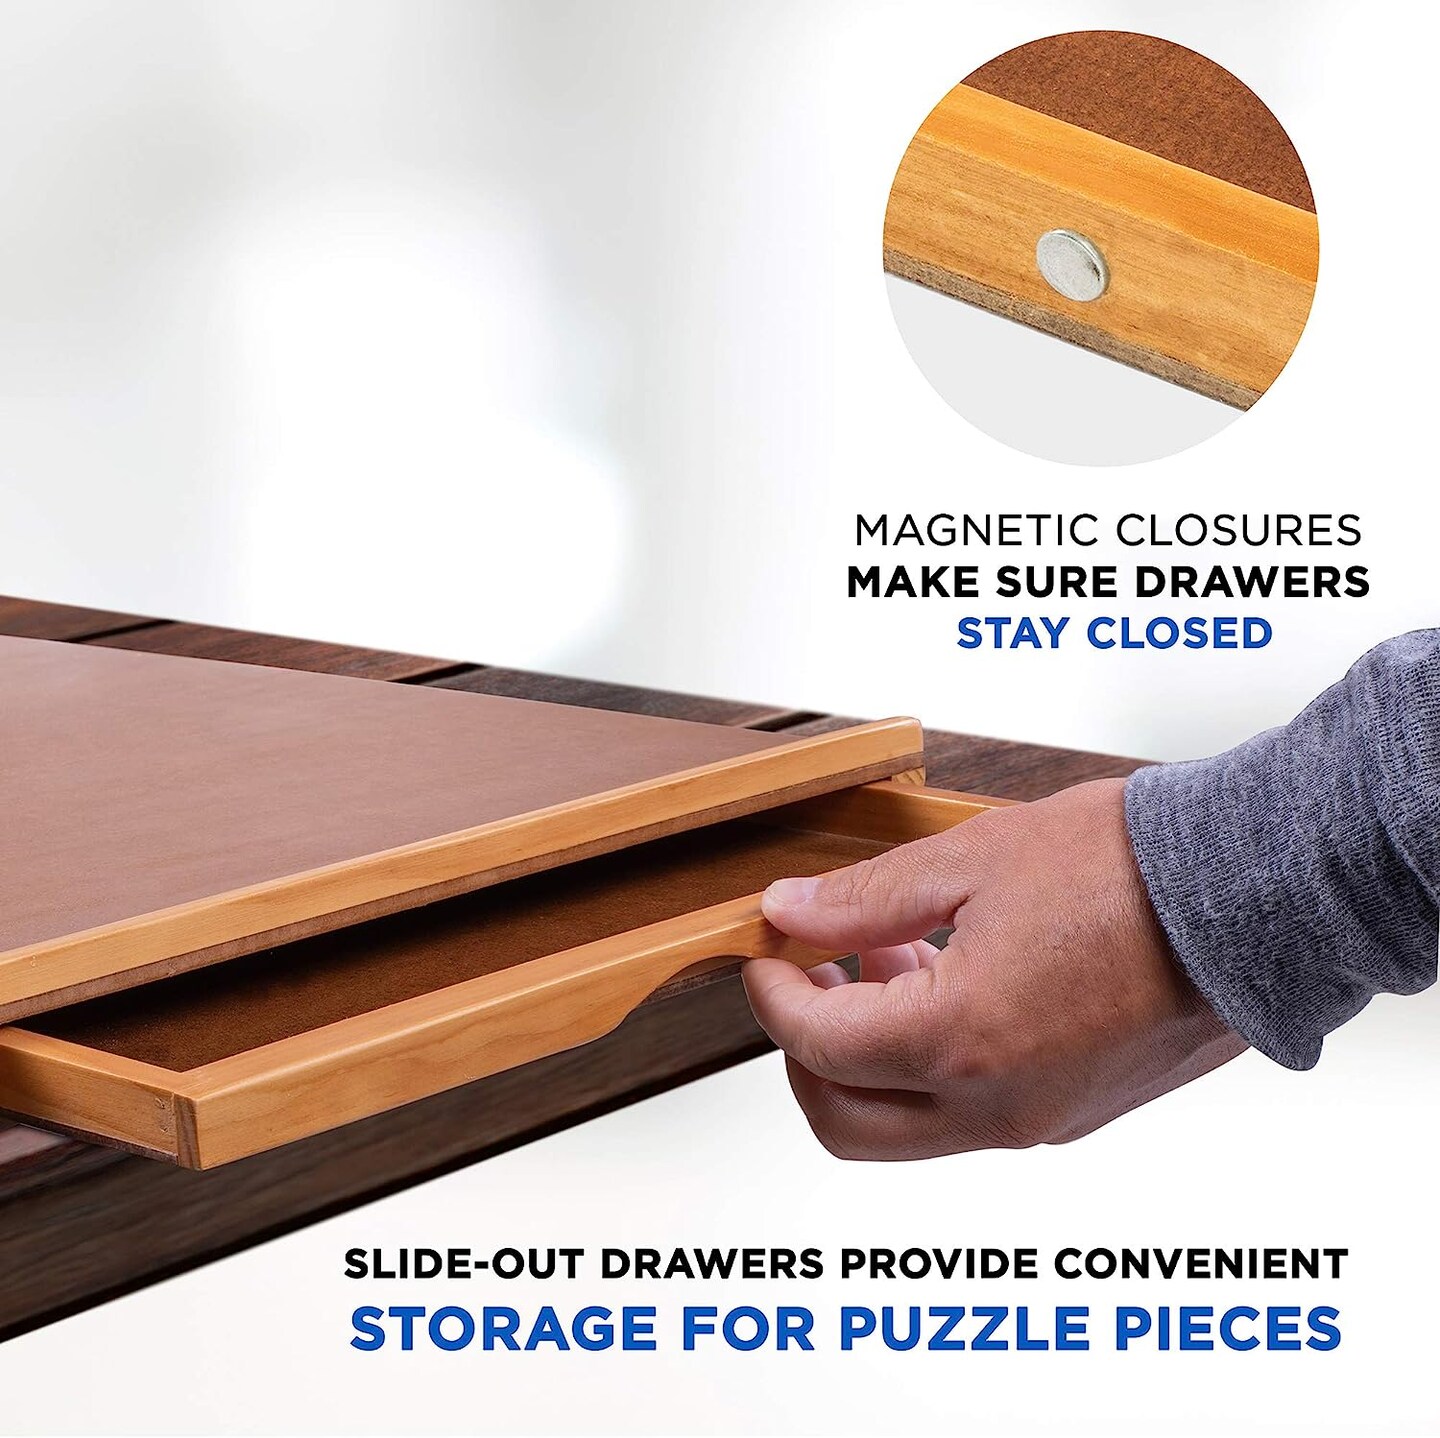 Jumbl 1000 Piece Puzzle Board, 23&#x201D; x 31&#x201D; Wooden Jigsaw Puzzle Table &#x26; Trays